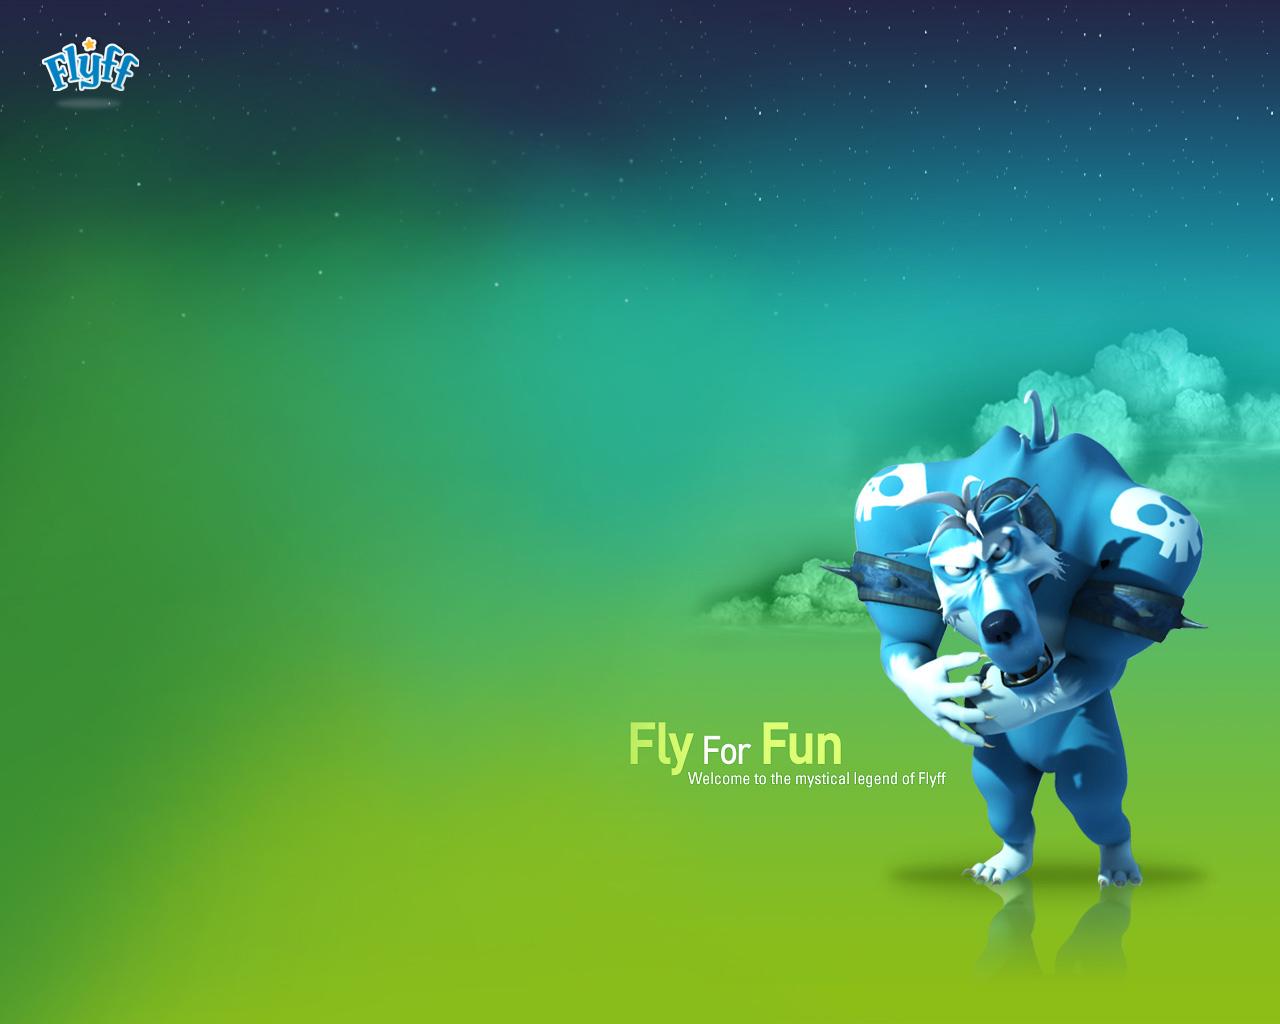 Fly_for_Fun_03_1280x1024.jpg